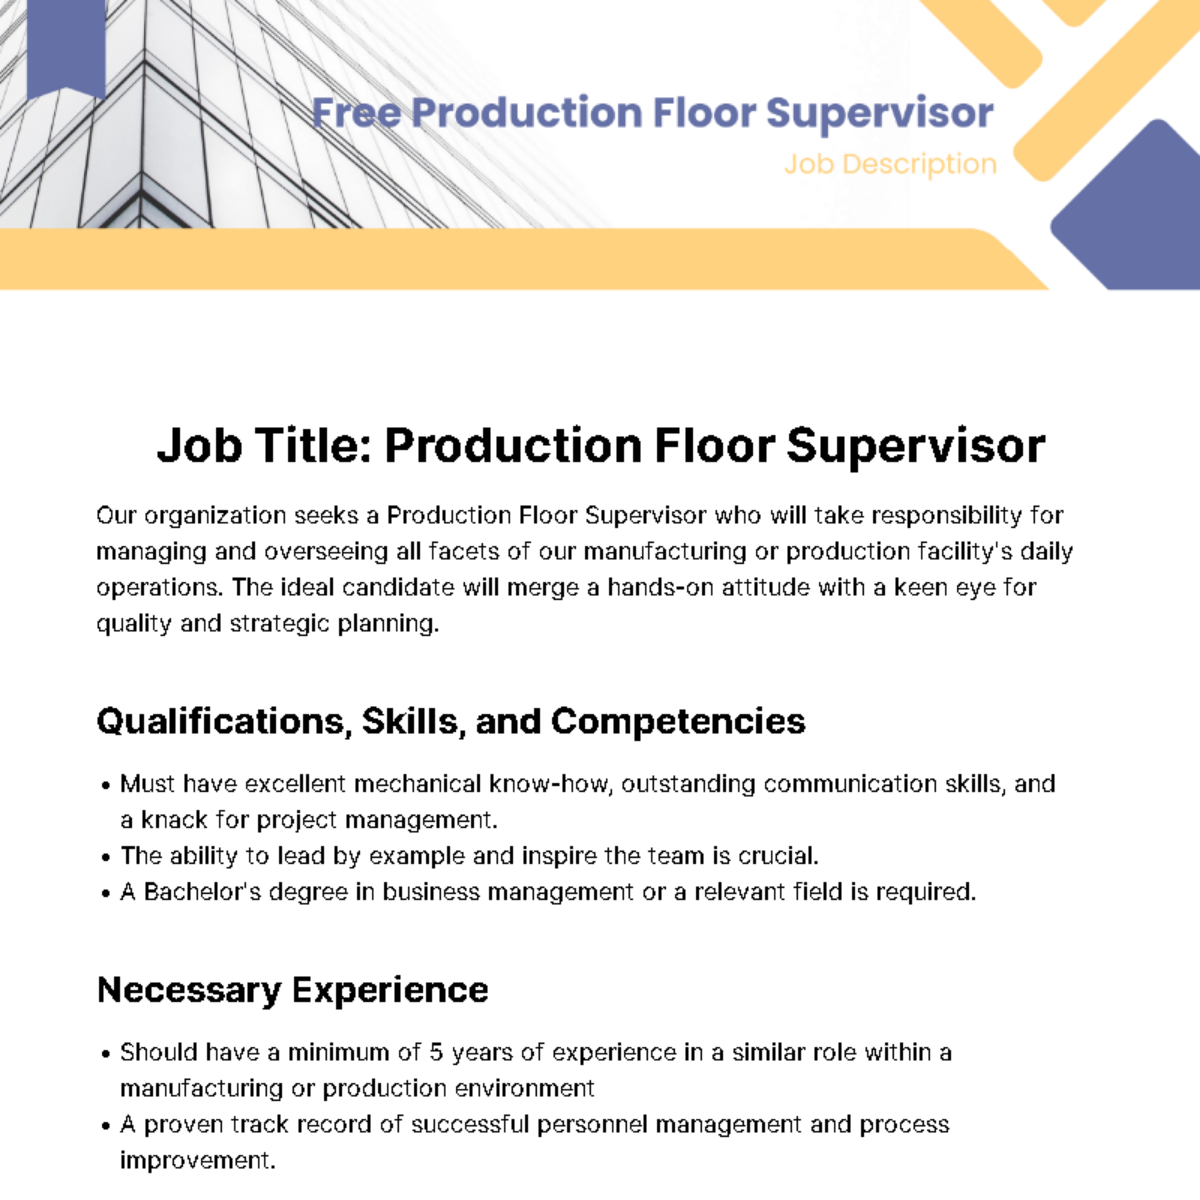 Production Floor Supervisor Job Description Template